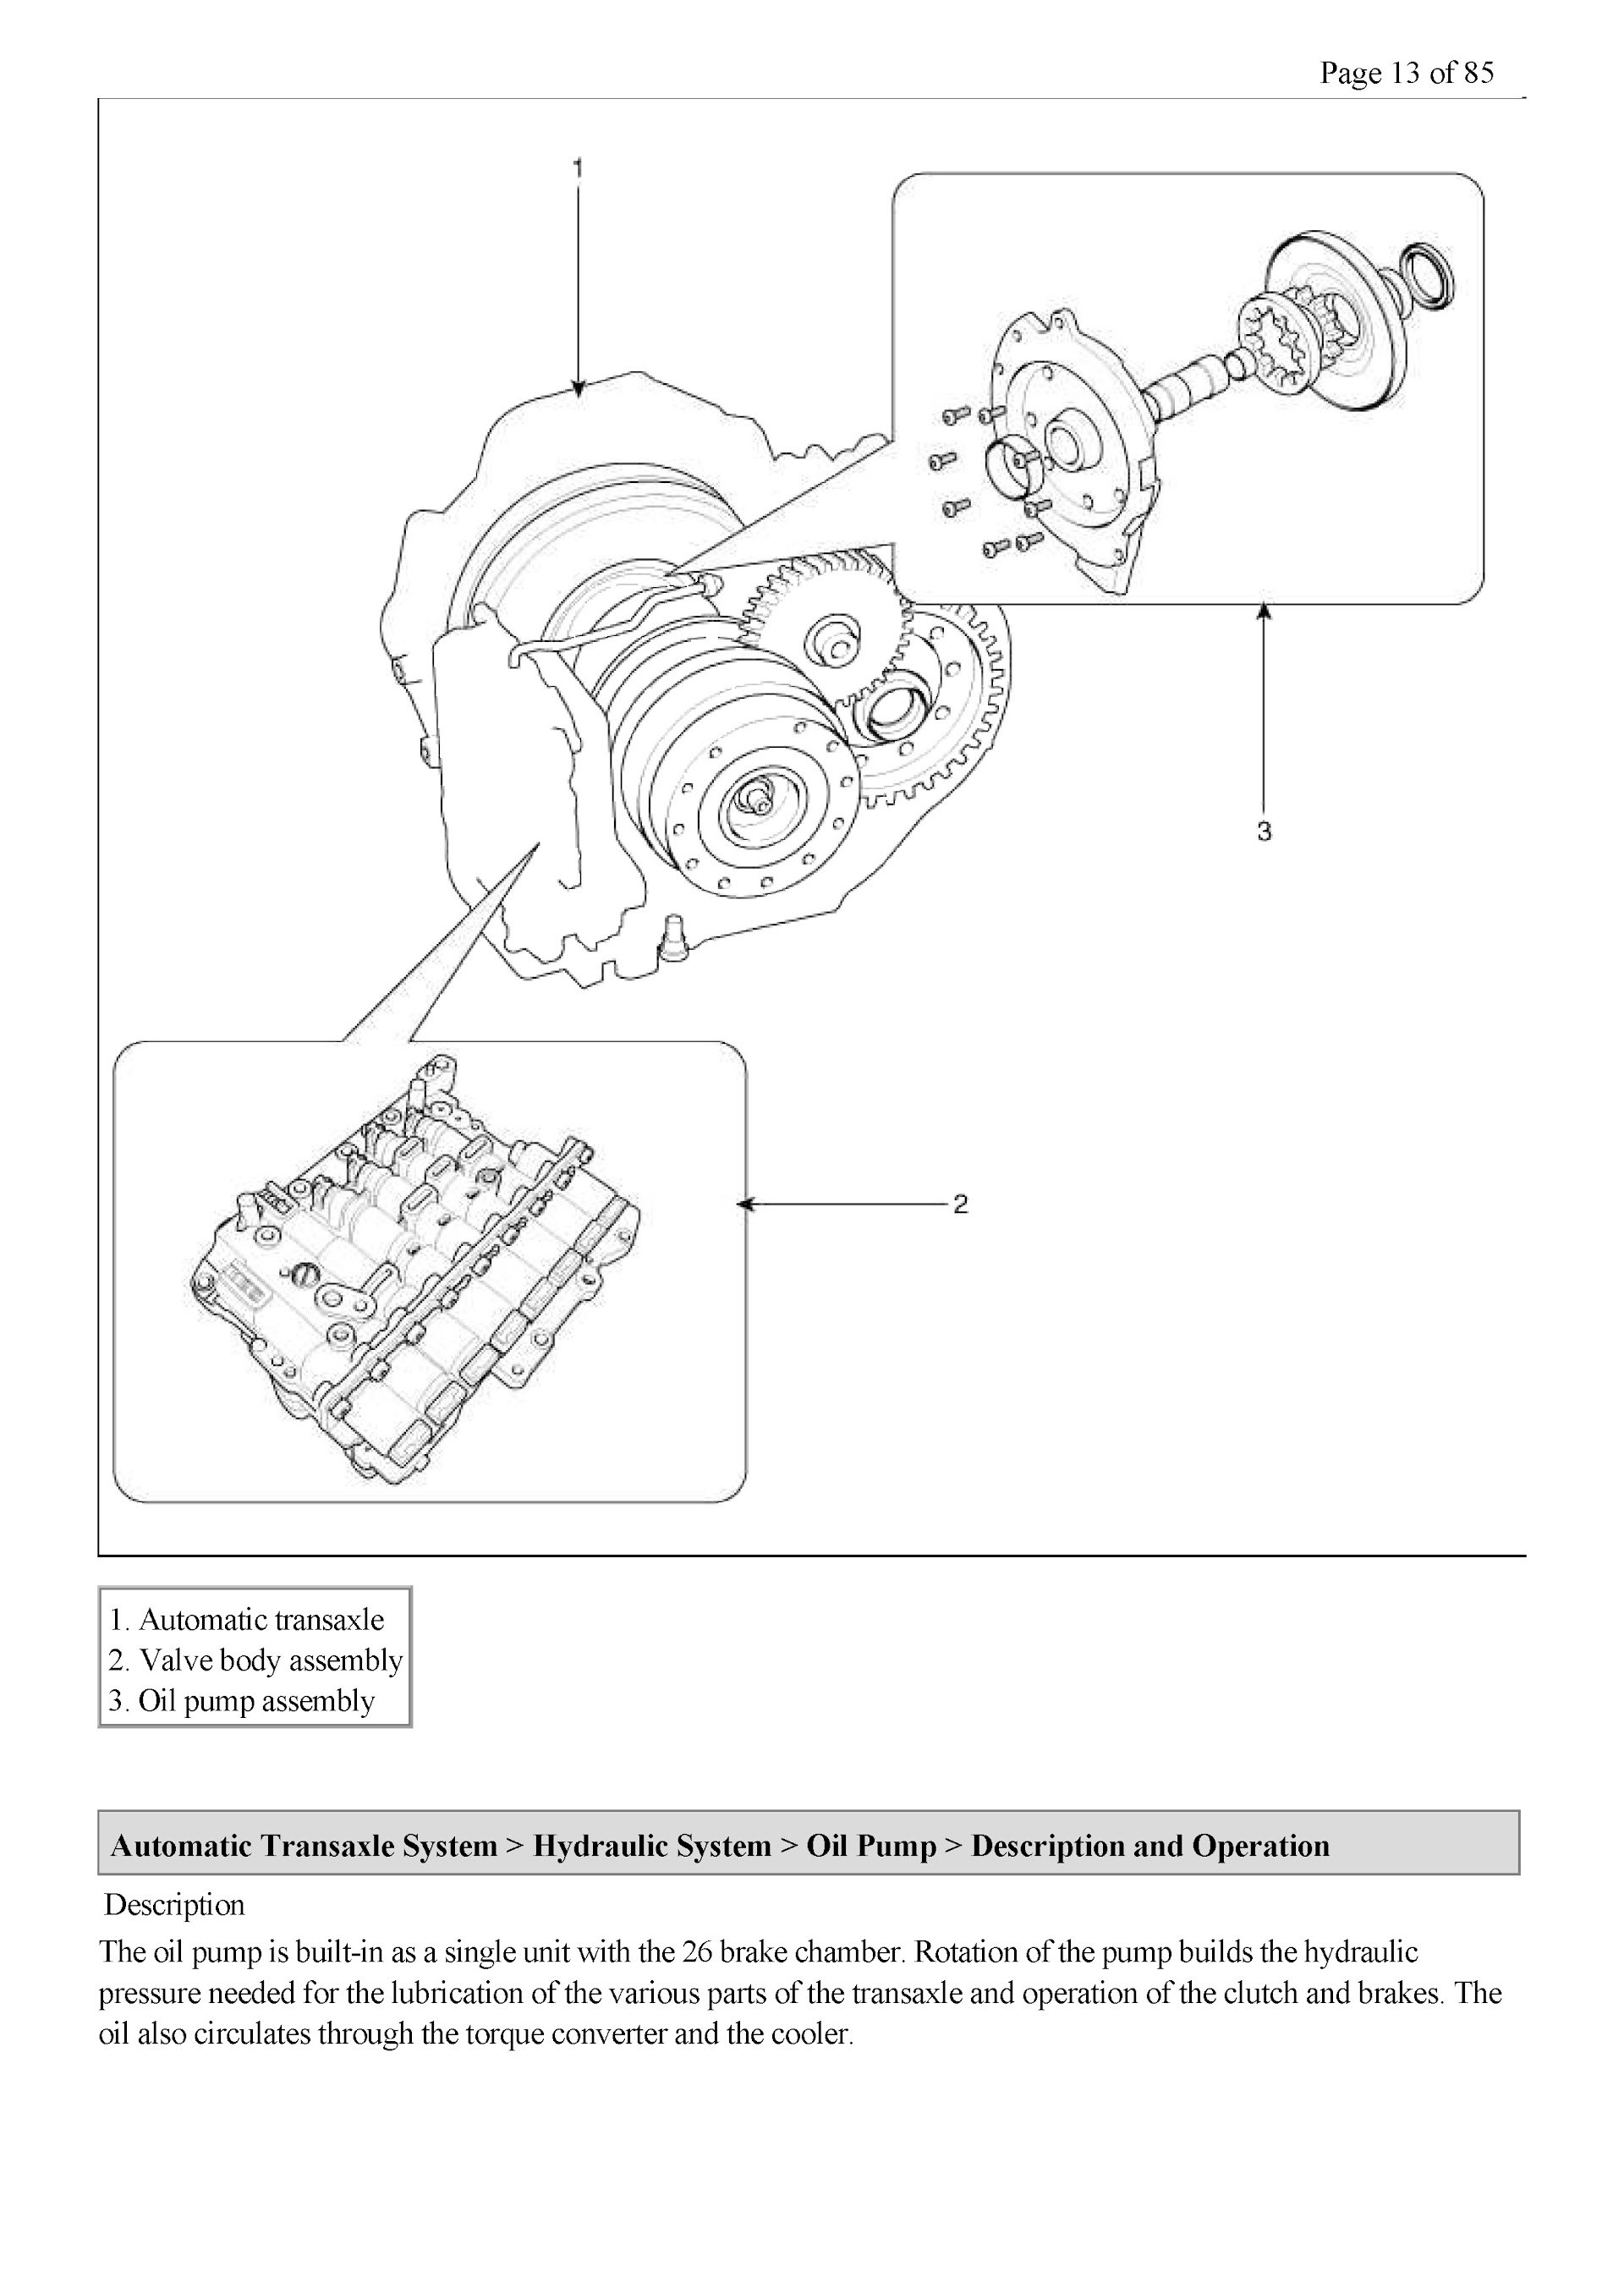 2011 Kia Forte Repair Manual, Automatic Transaxle System